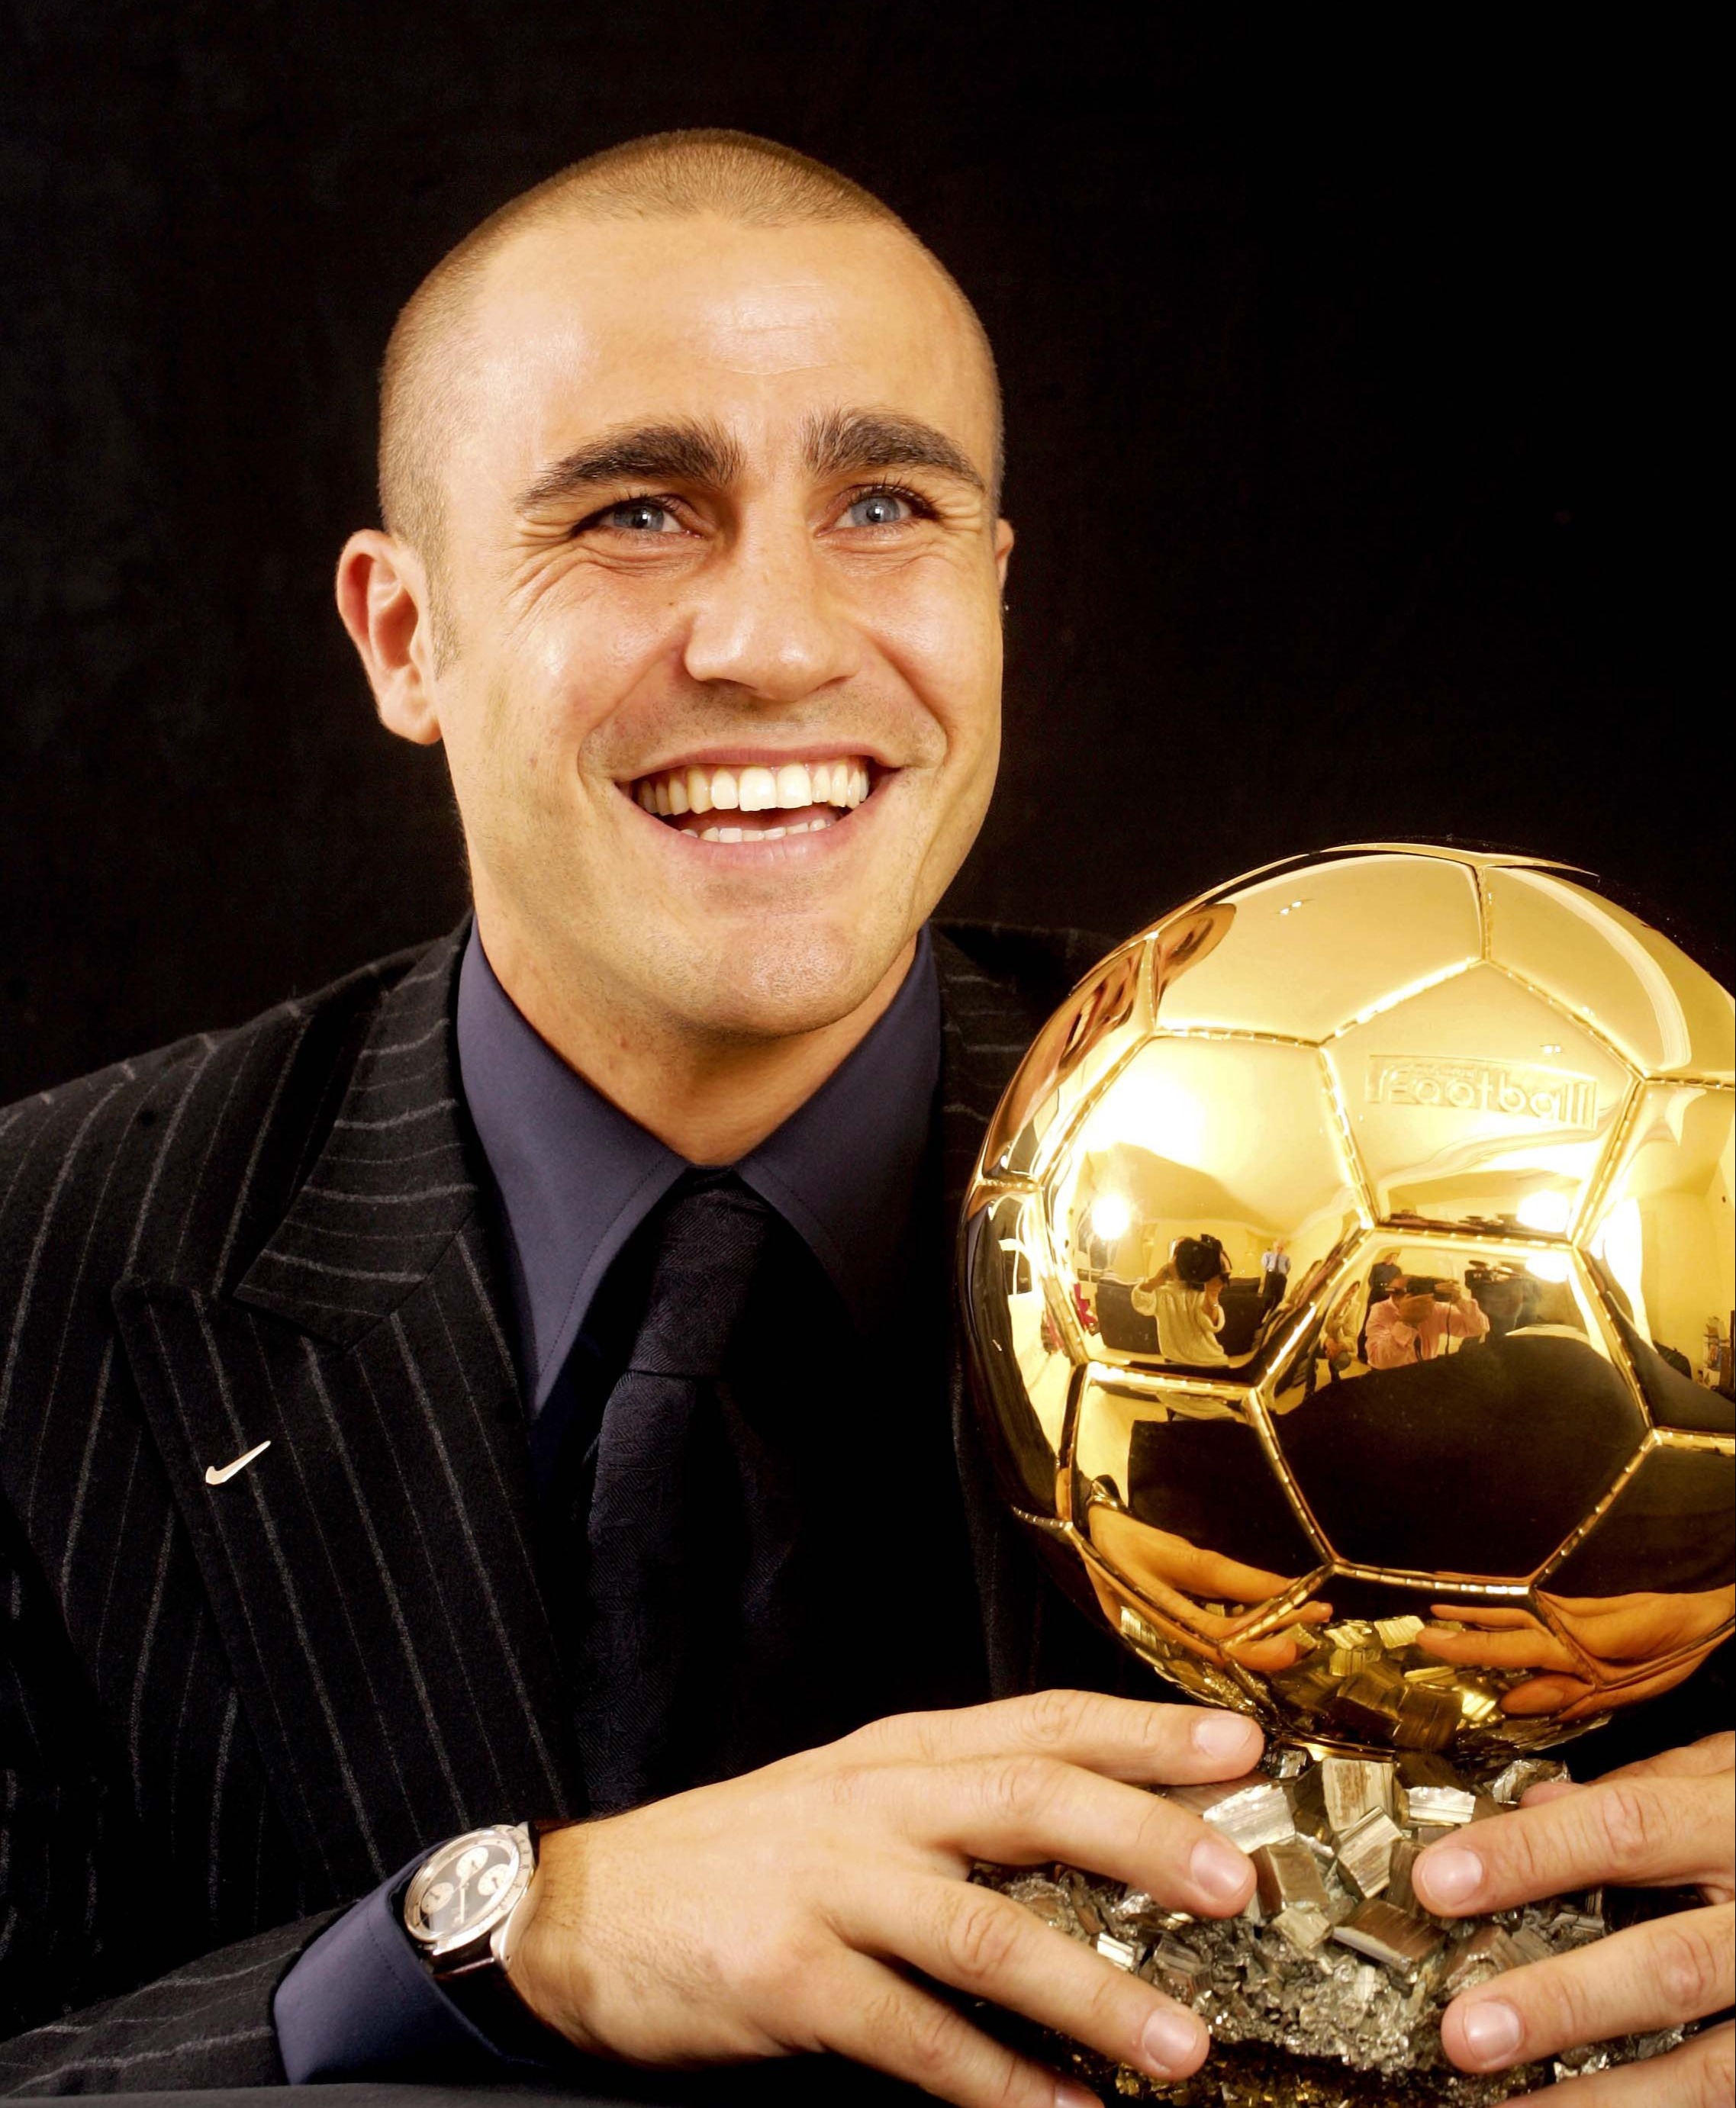 Fabio Cannavaro is now a professional football coach